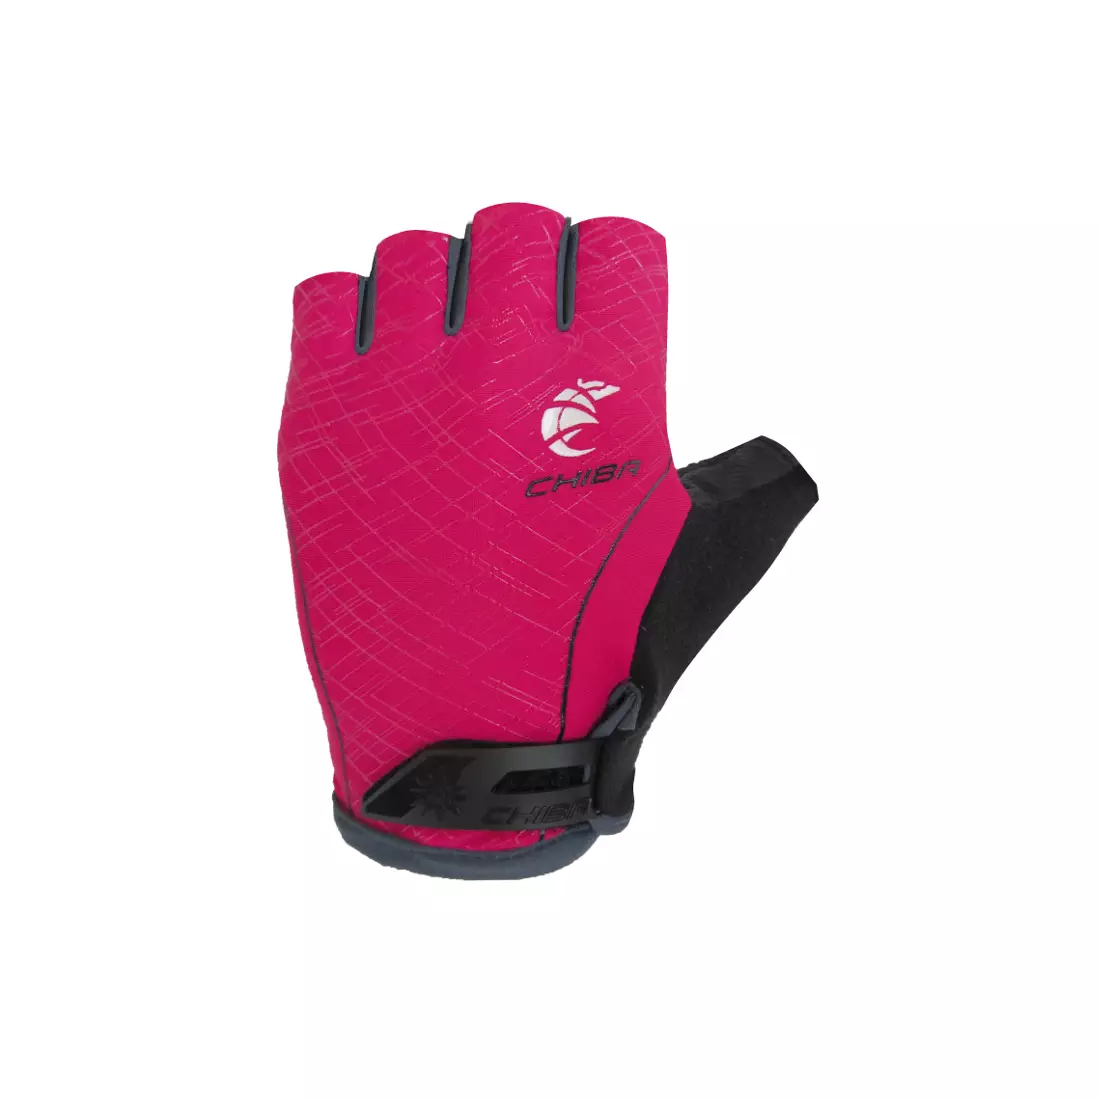 CHIBA LADY MATRIX women's cycling gloves, pink